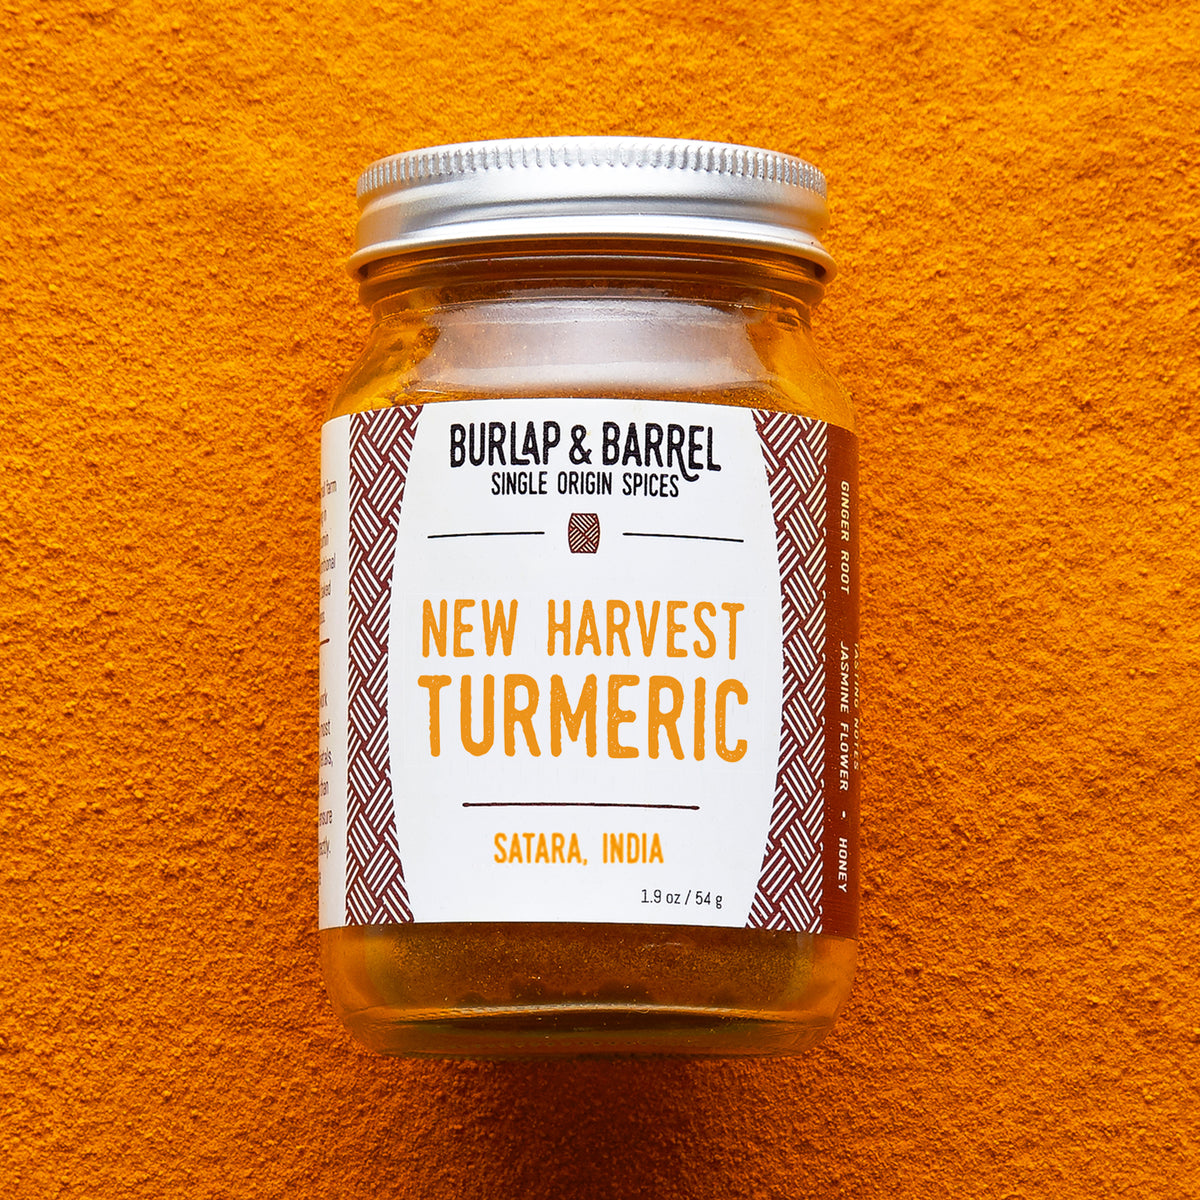 New Harvest Turmeric - Burlap & Barrel